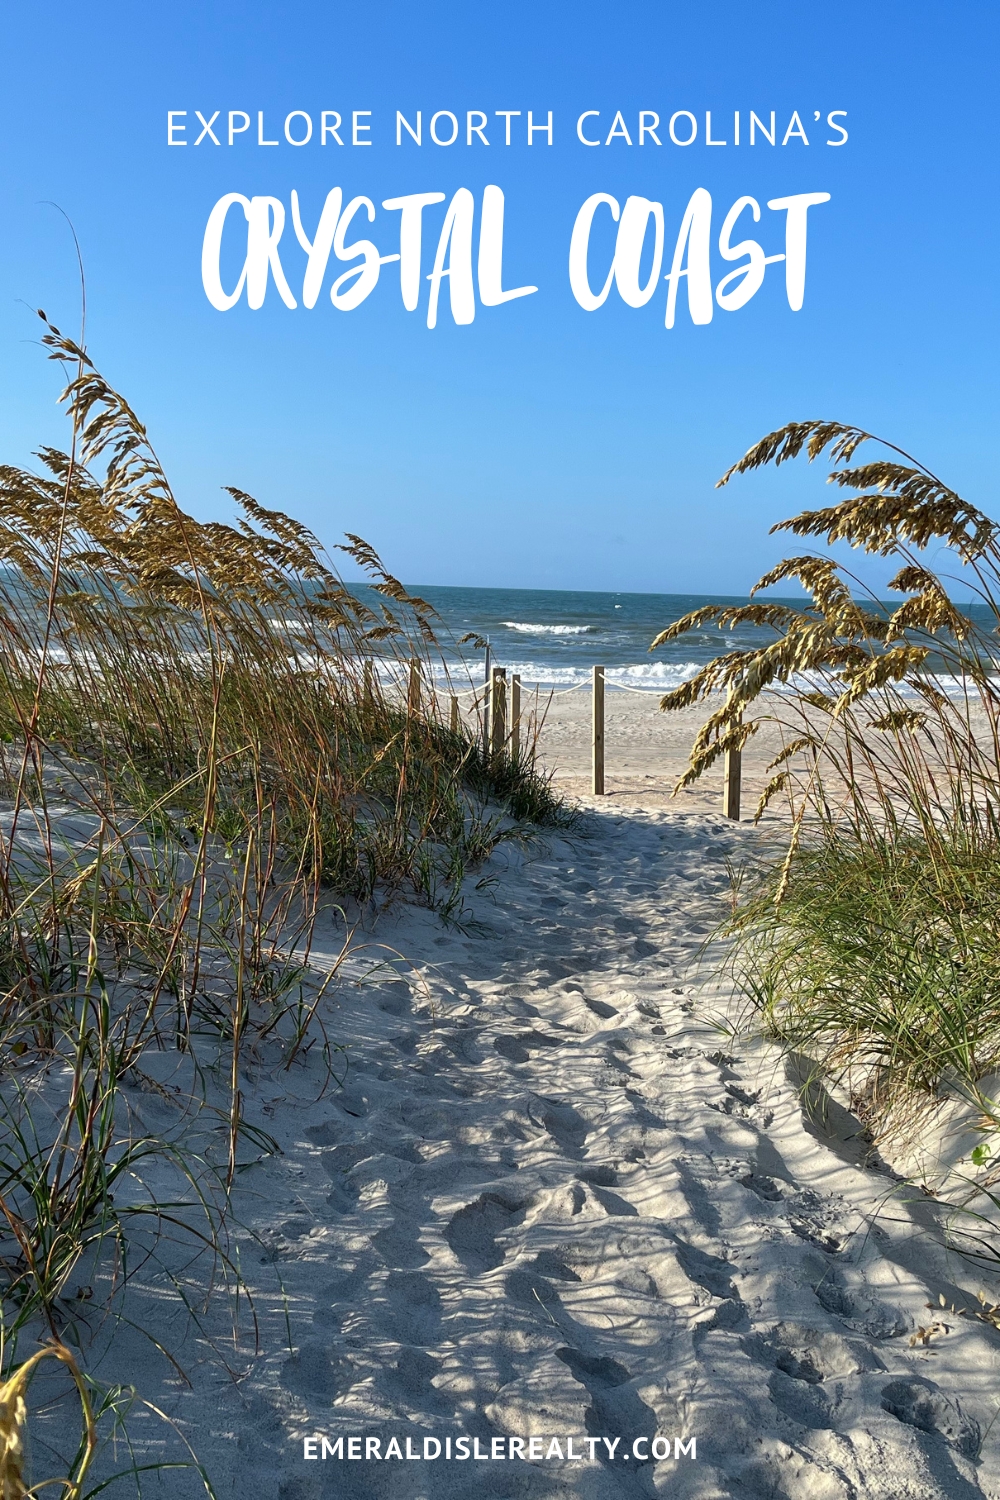 Explore North Carolina's Crystal Coast